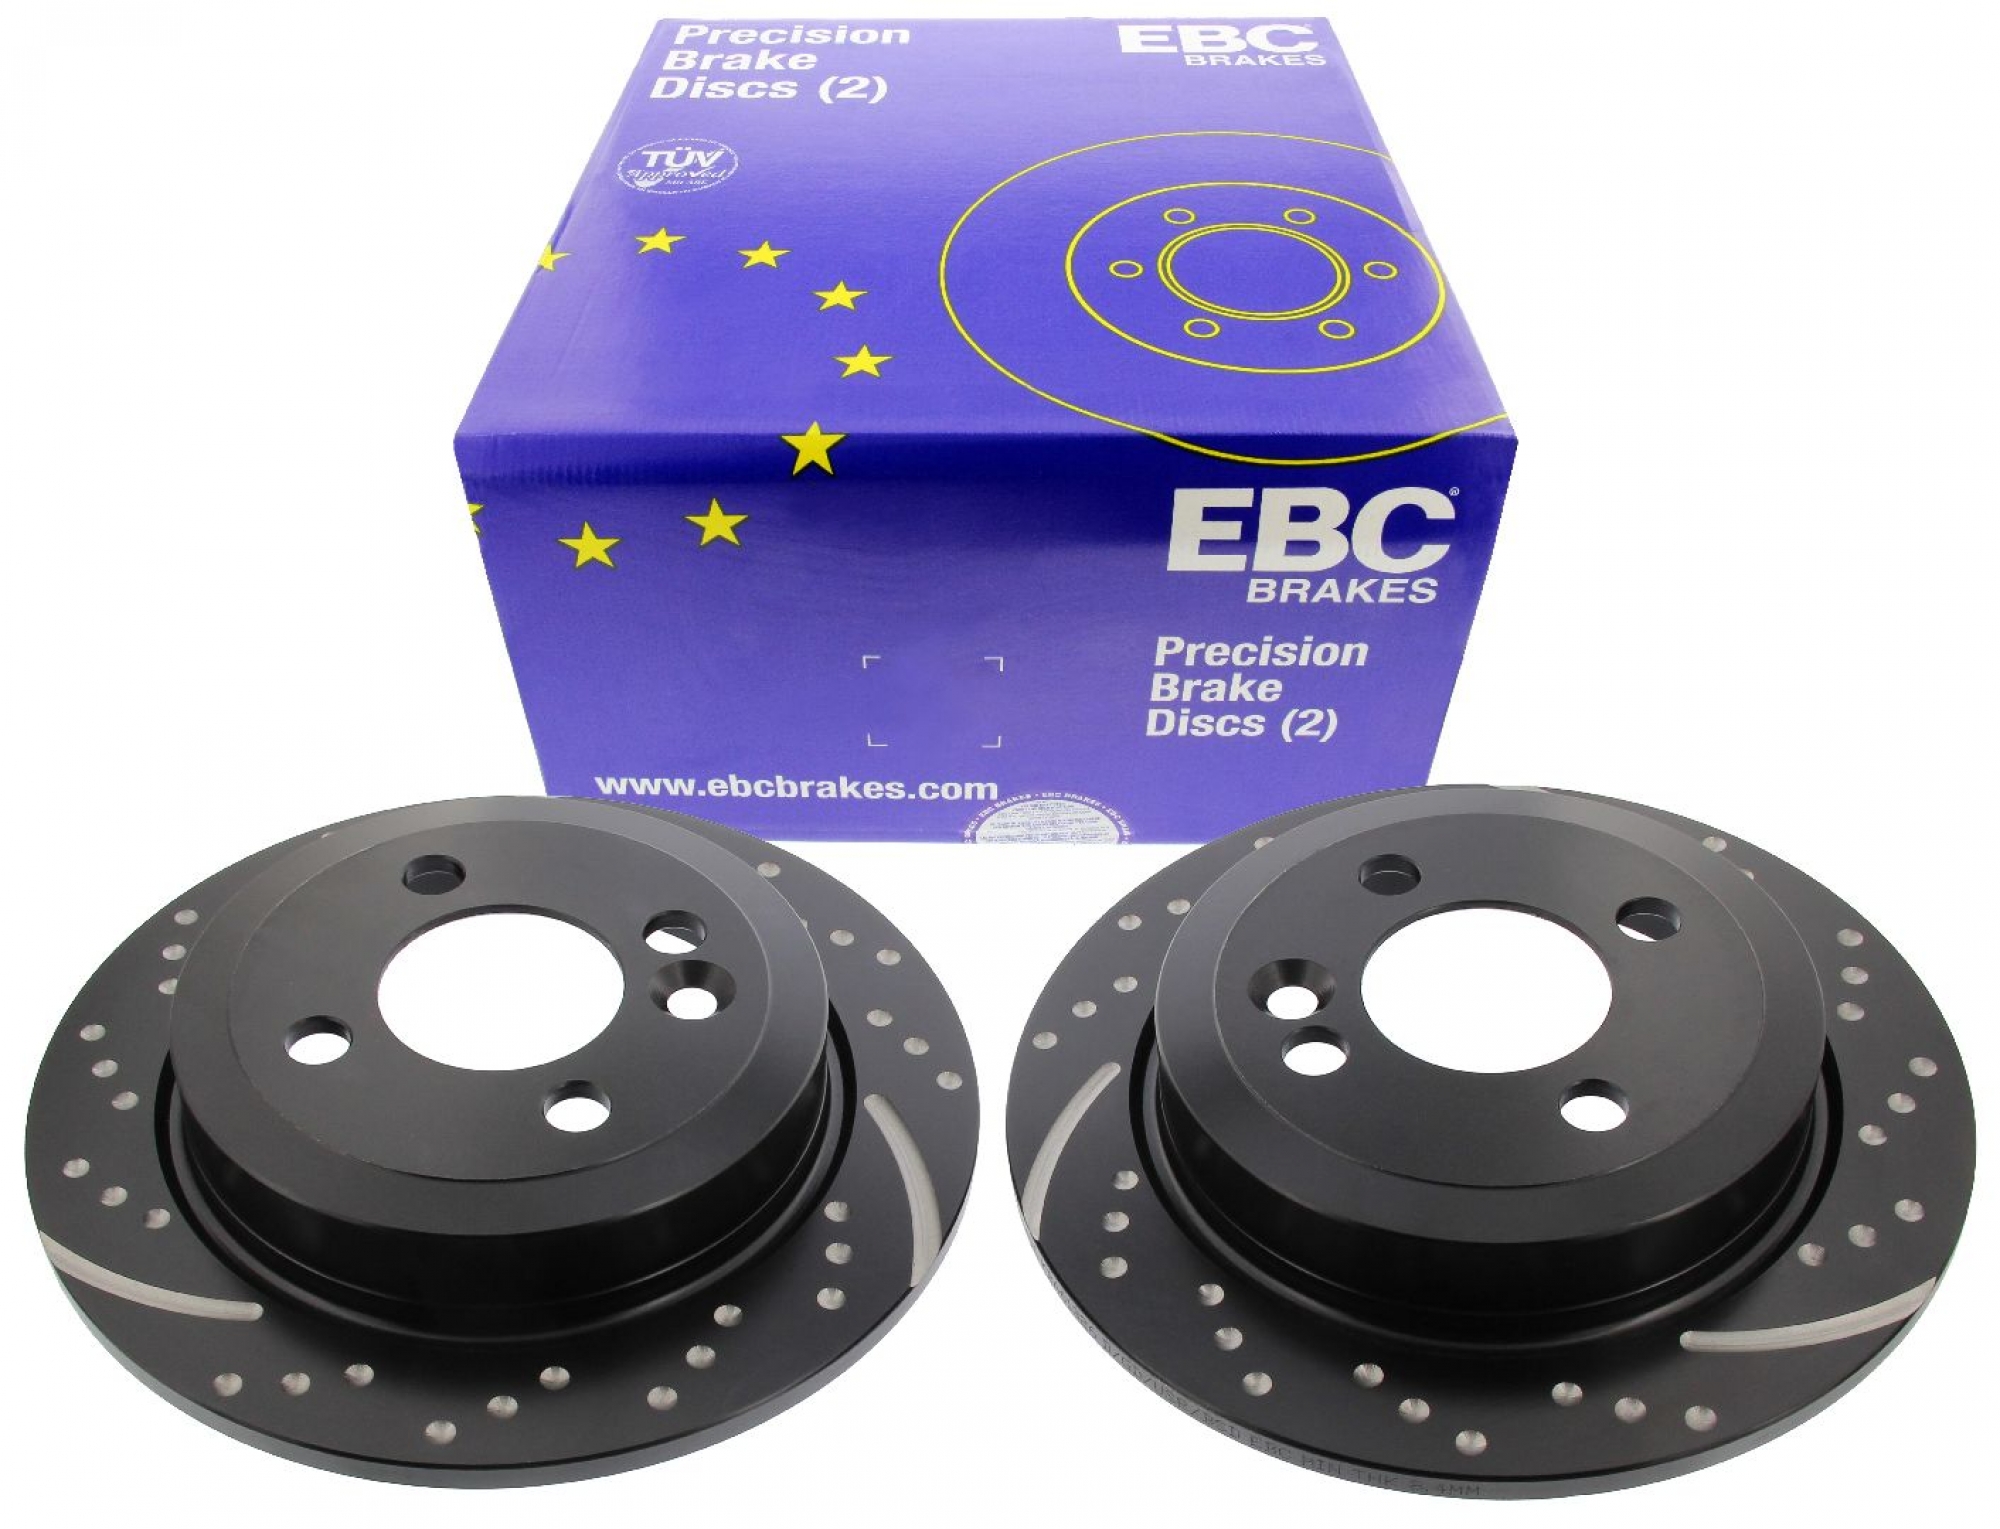 EBC-Bremsscheiben, Turbo Groove Disc Black (2-teilig), HA, Mini Mini